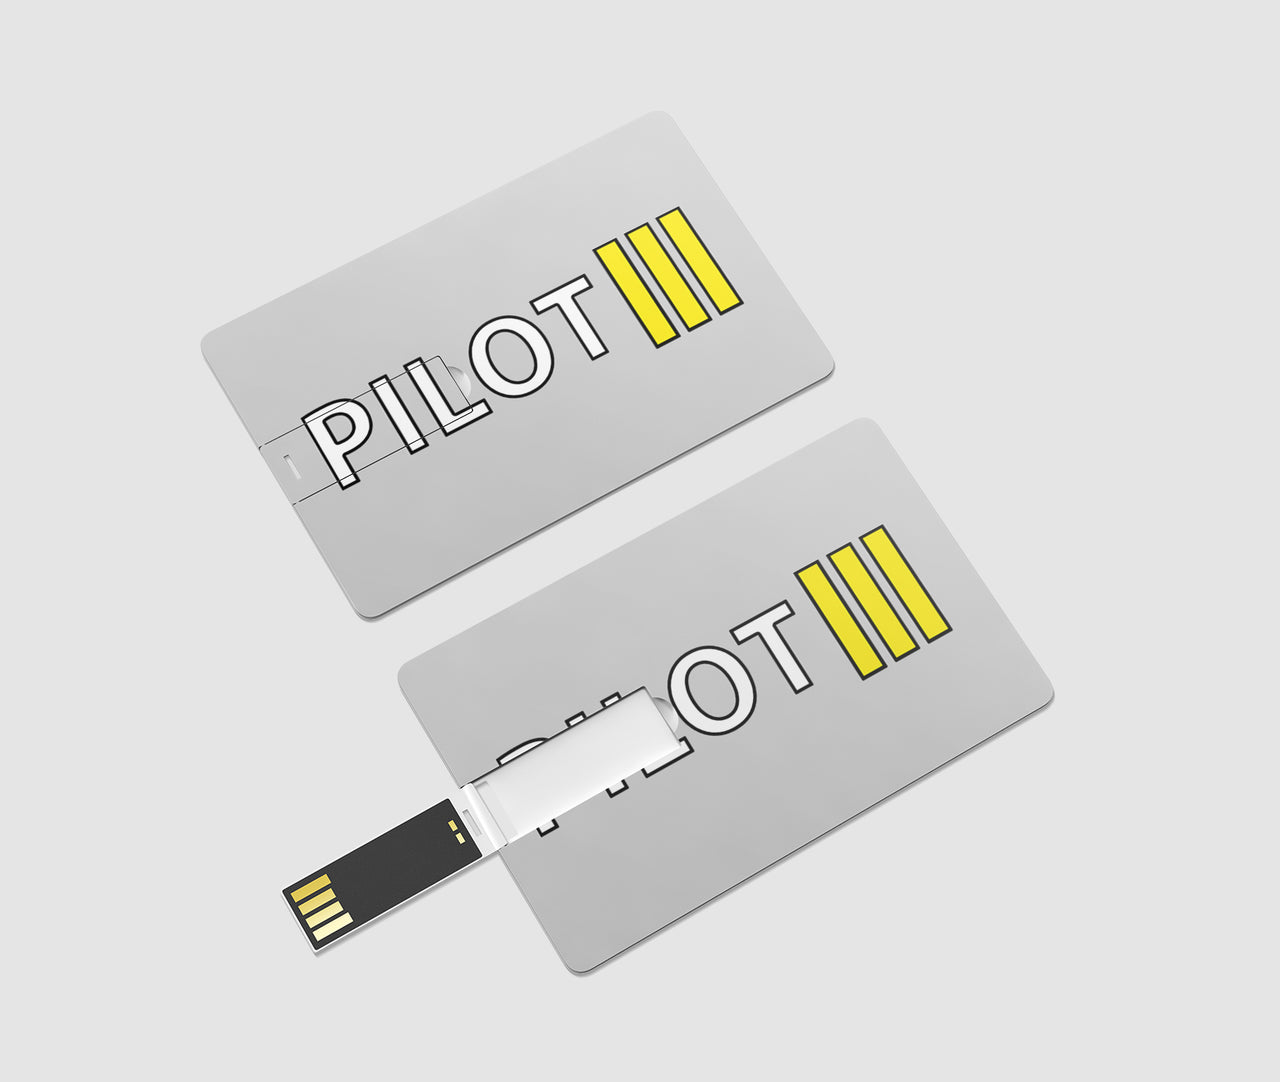 Pilot & Stripes (3 Lines) Designed USB Cards